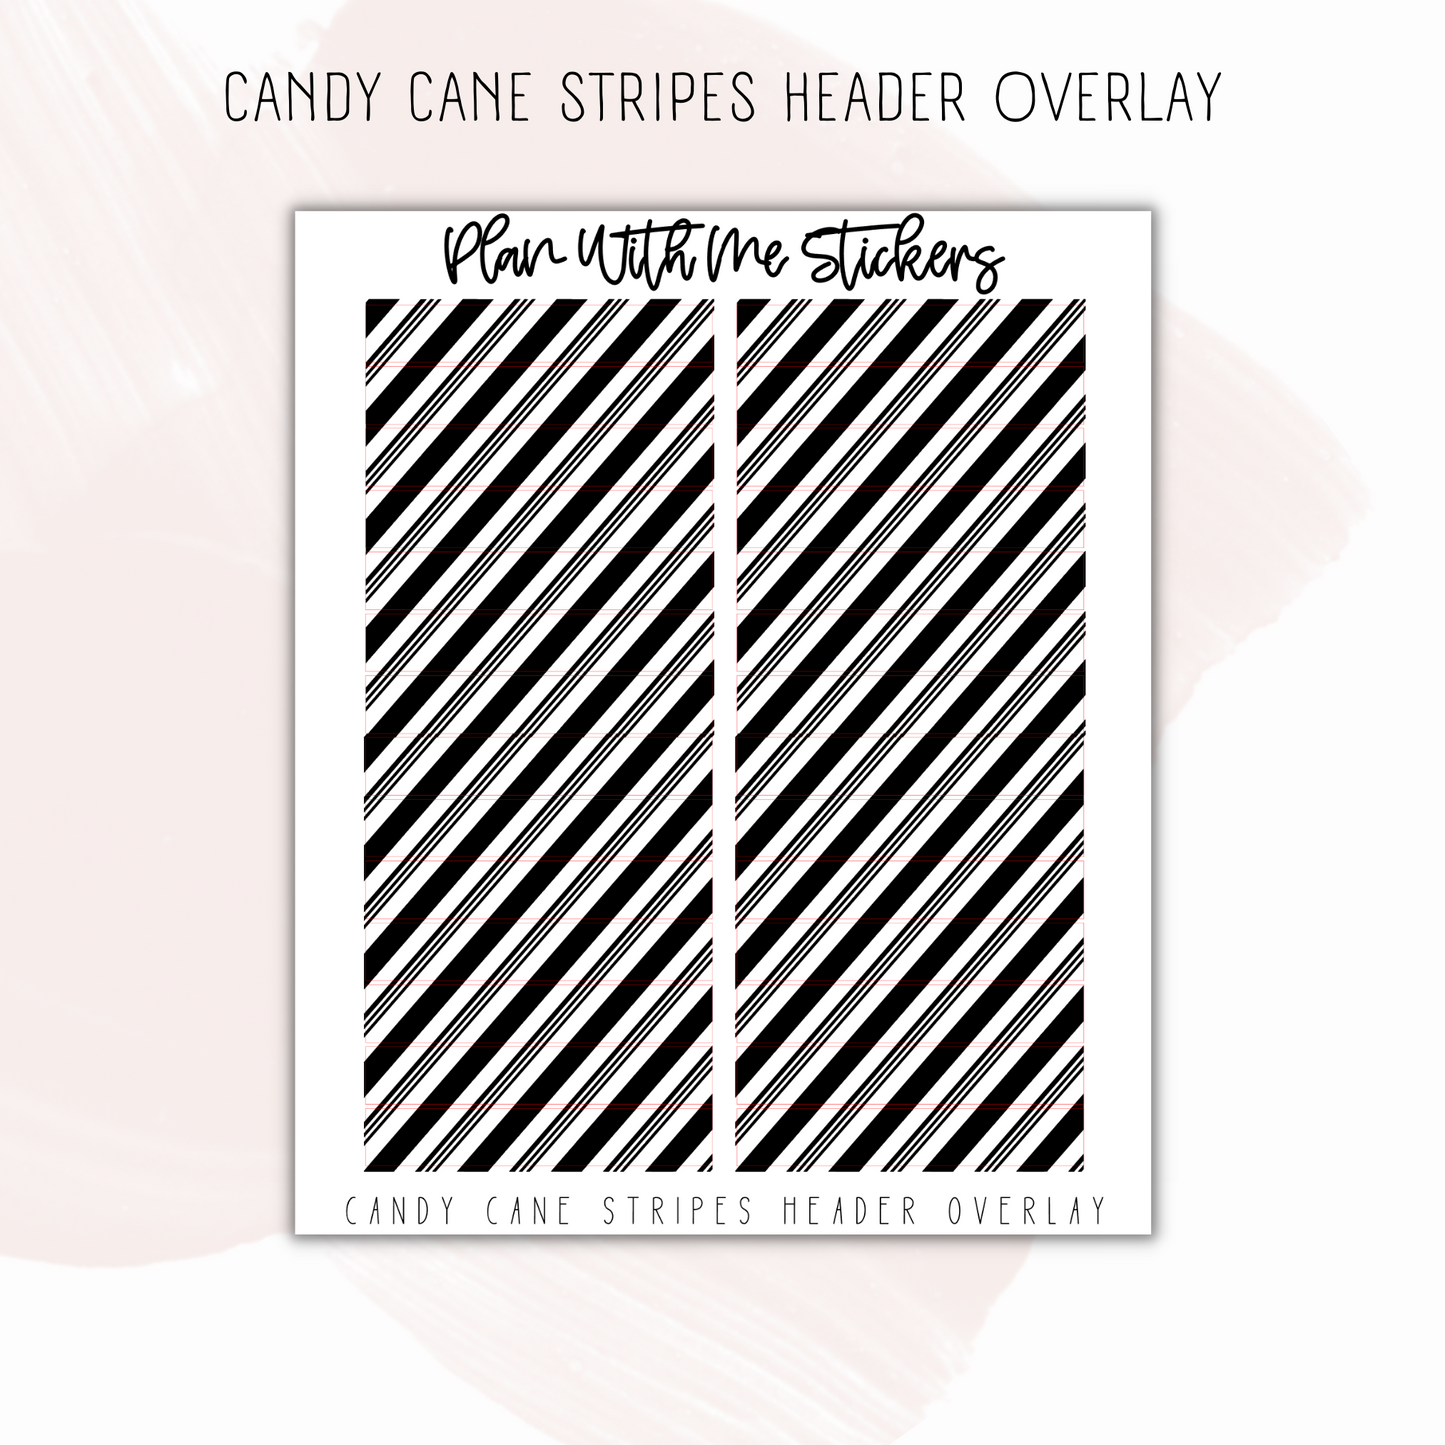 Candy Cane Stripes Header Overlays